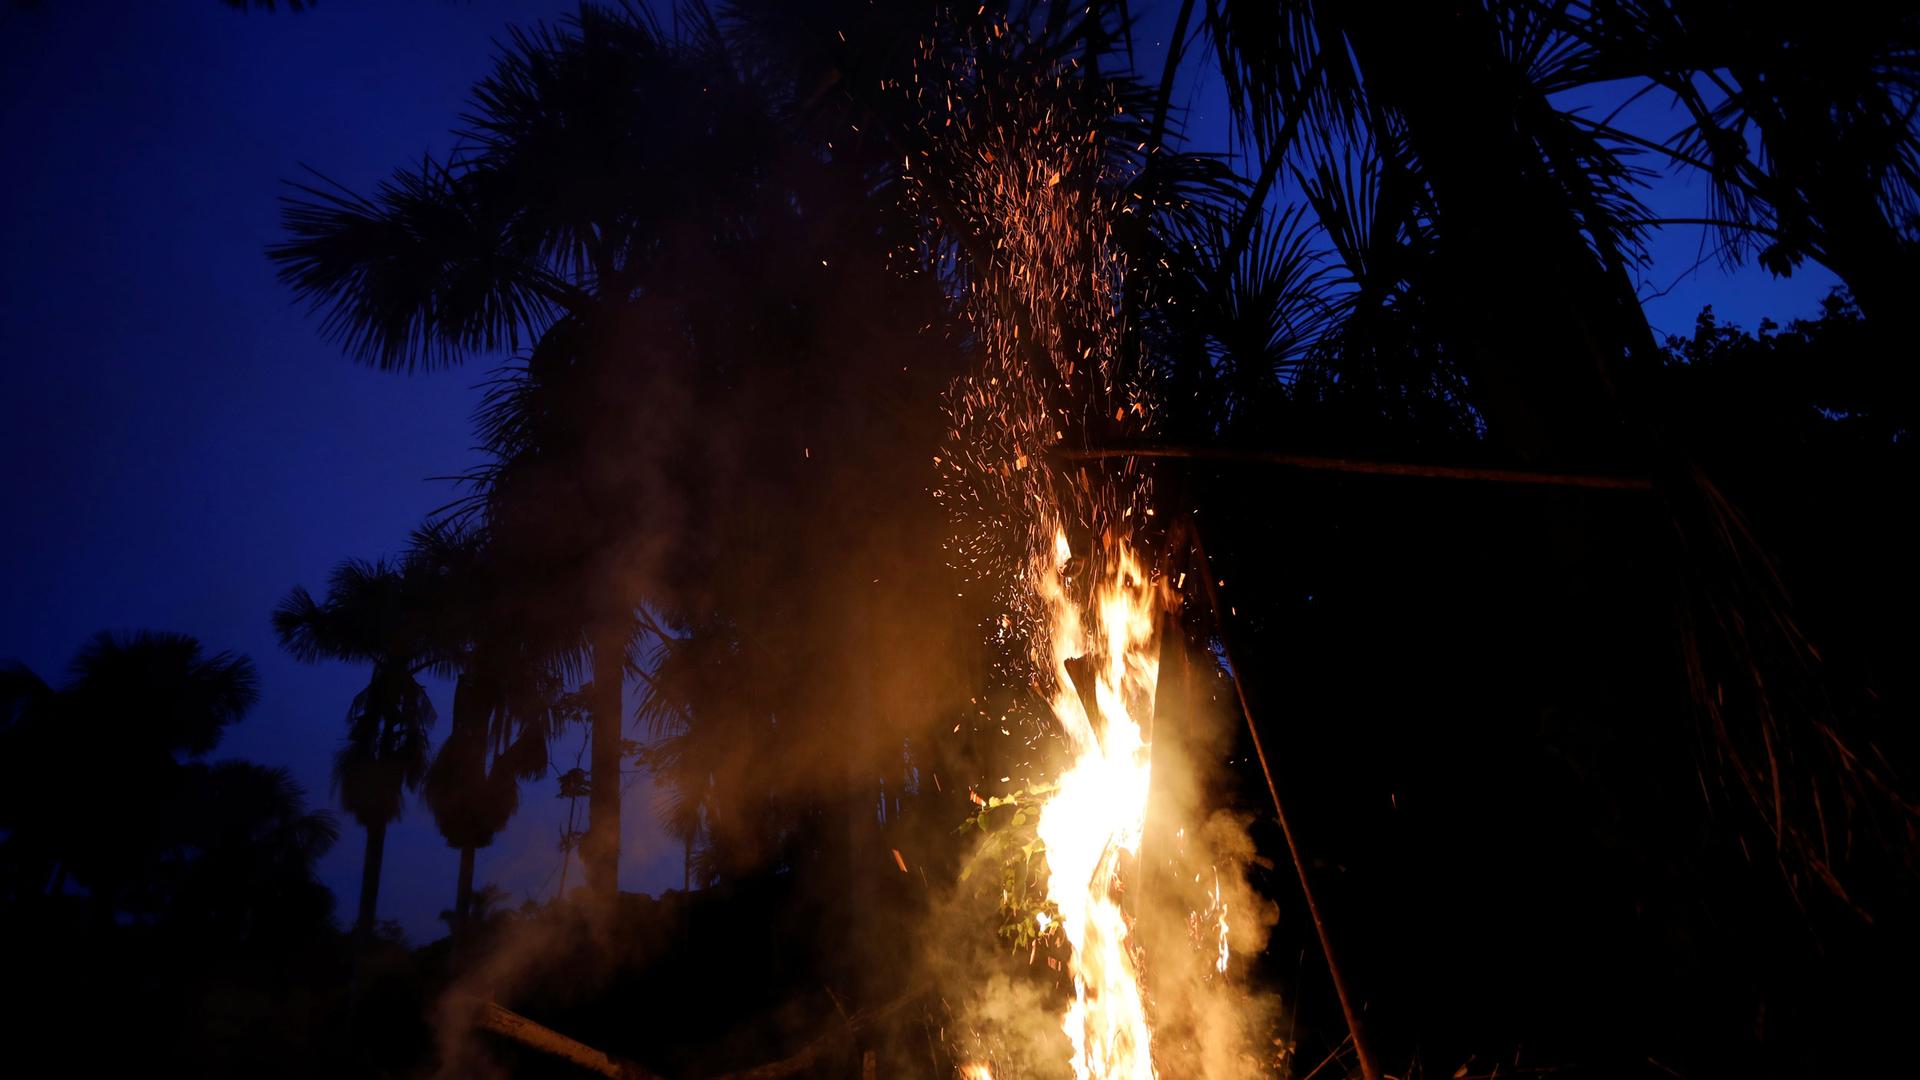 Fire licks up a palm tree at night